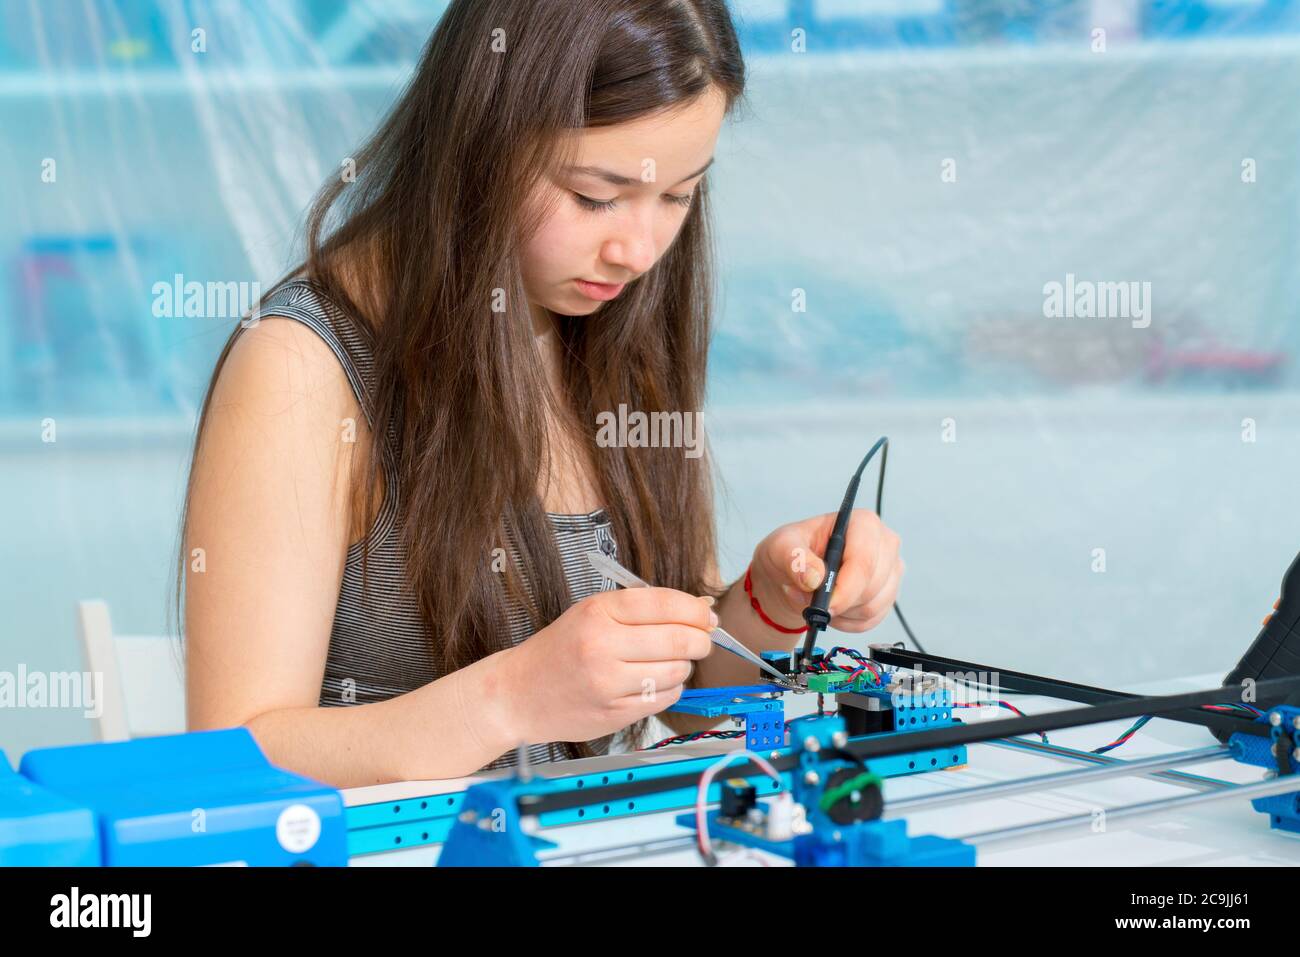 Girl working on robotics project. Stock Photo